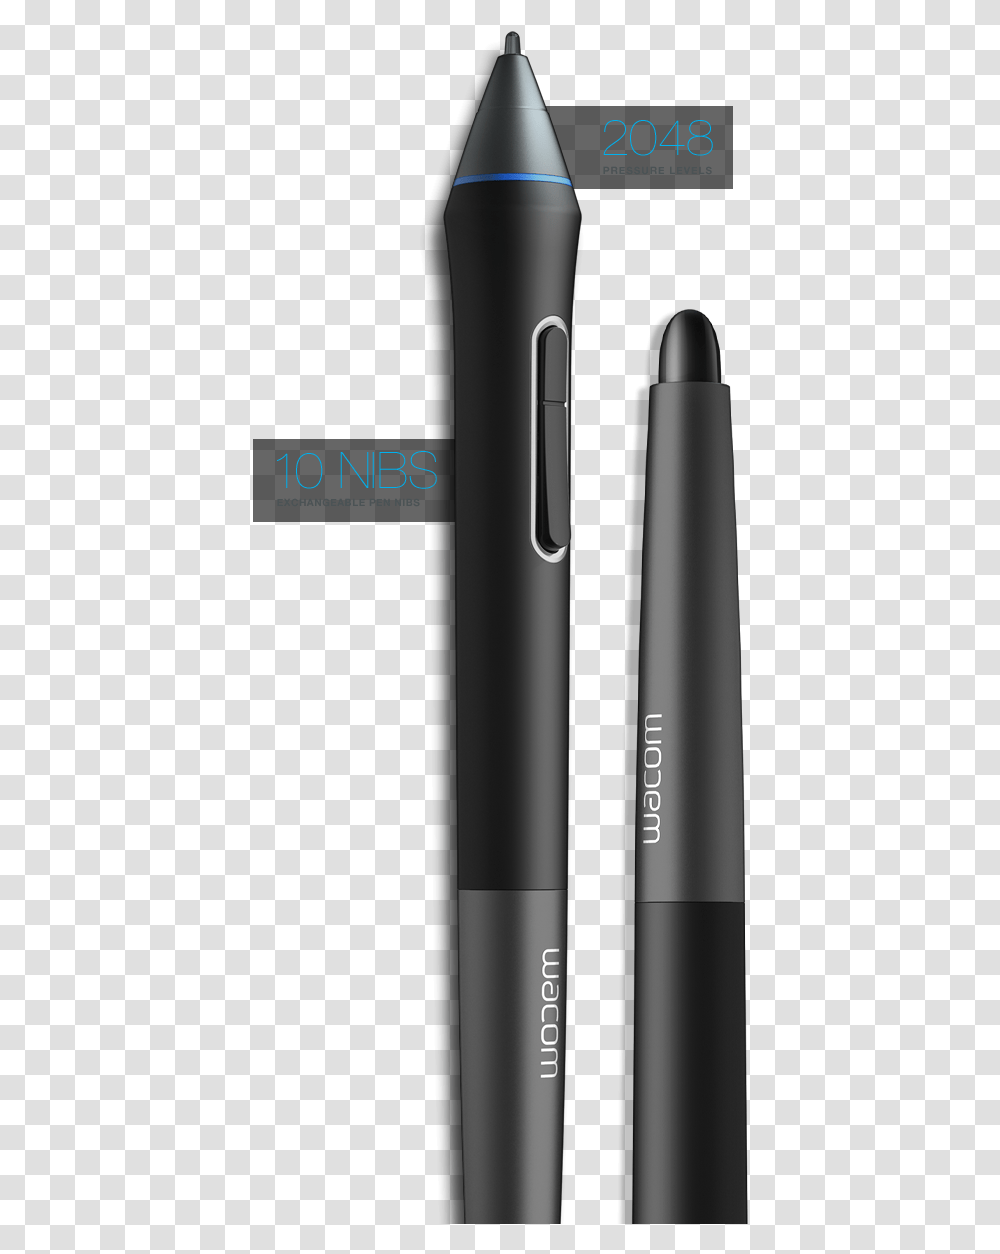 Wacom Cintiq 13hd Pen, Electronics, Phone, Cutlery, Brush Transparent Png